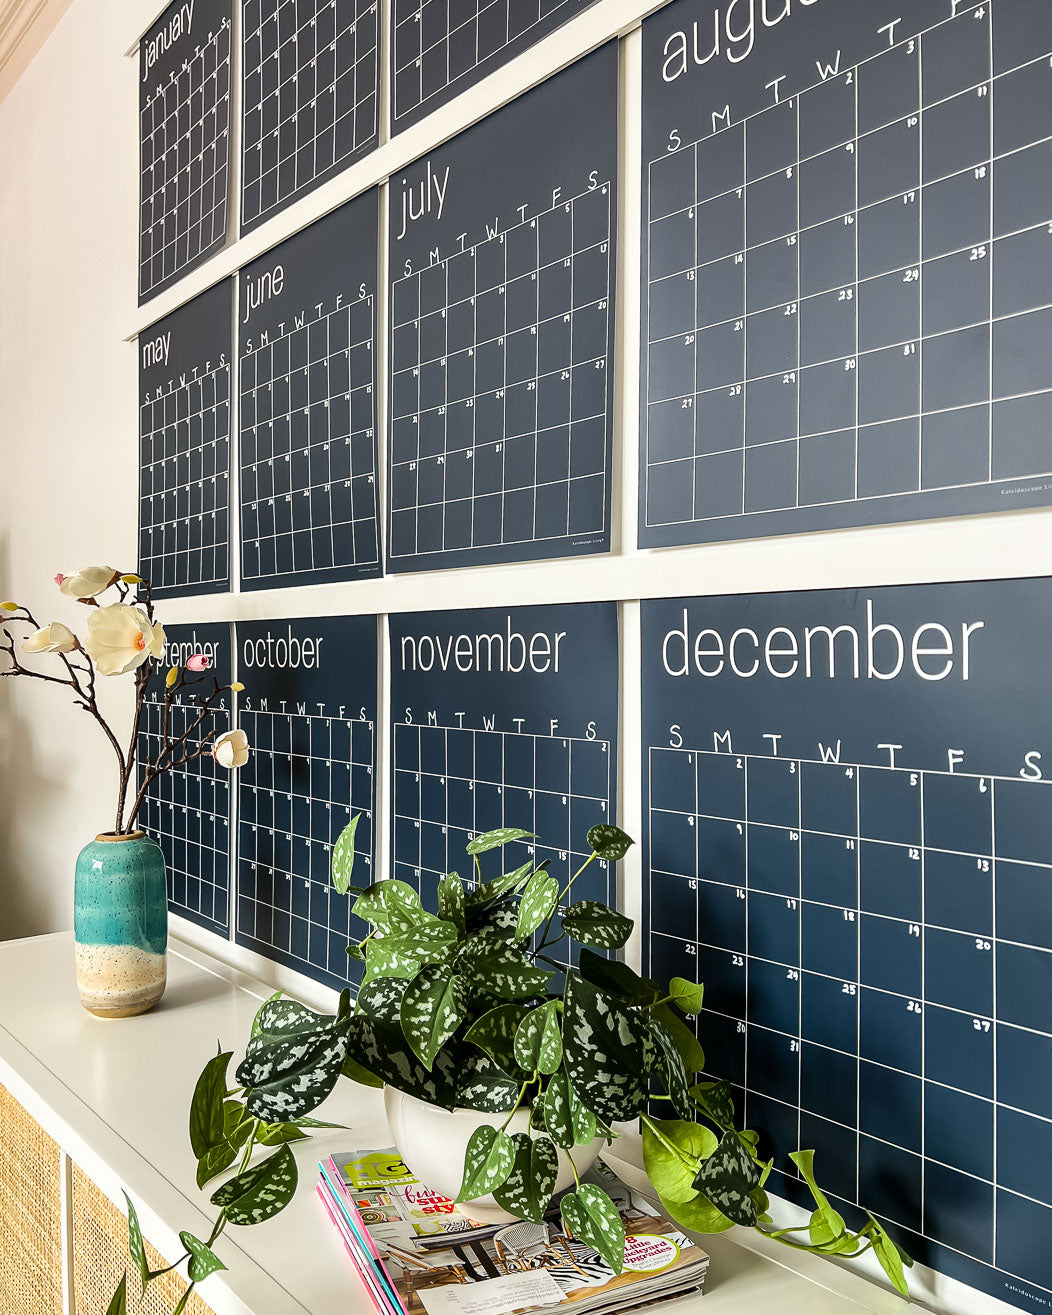 Reusable Navy Blue Kaleidoscope Living Giant Wall Calendar